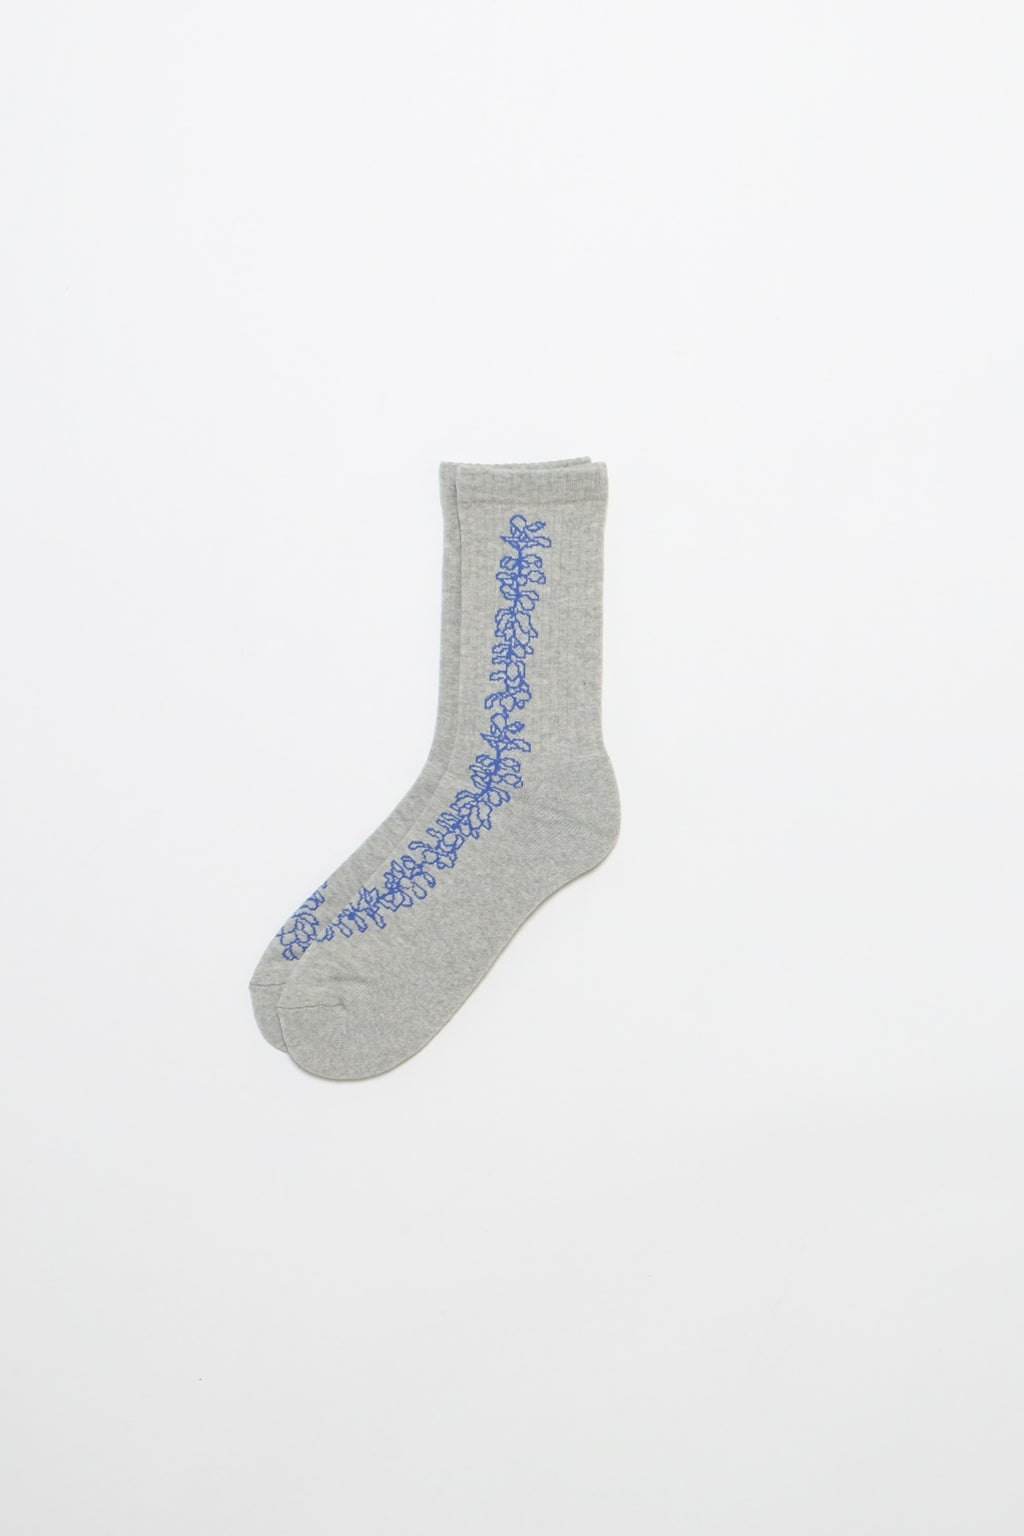 Socks - Pua - HeatherGrey/Royal